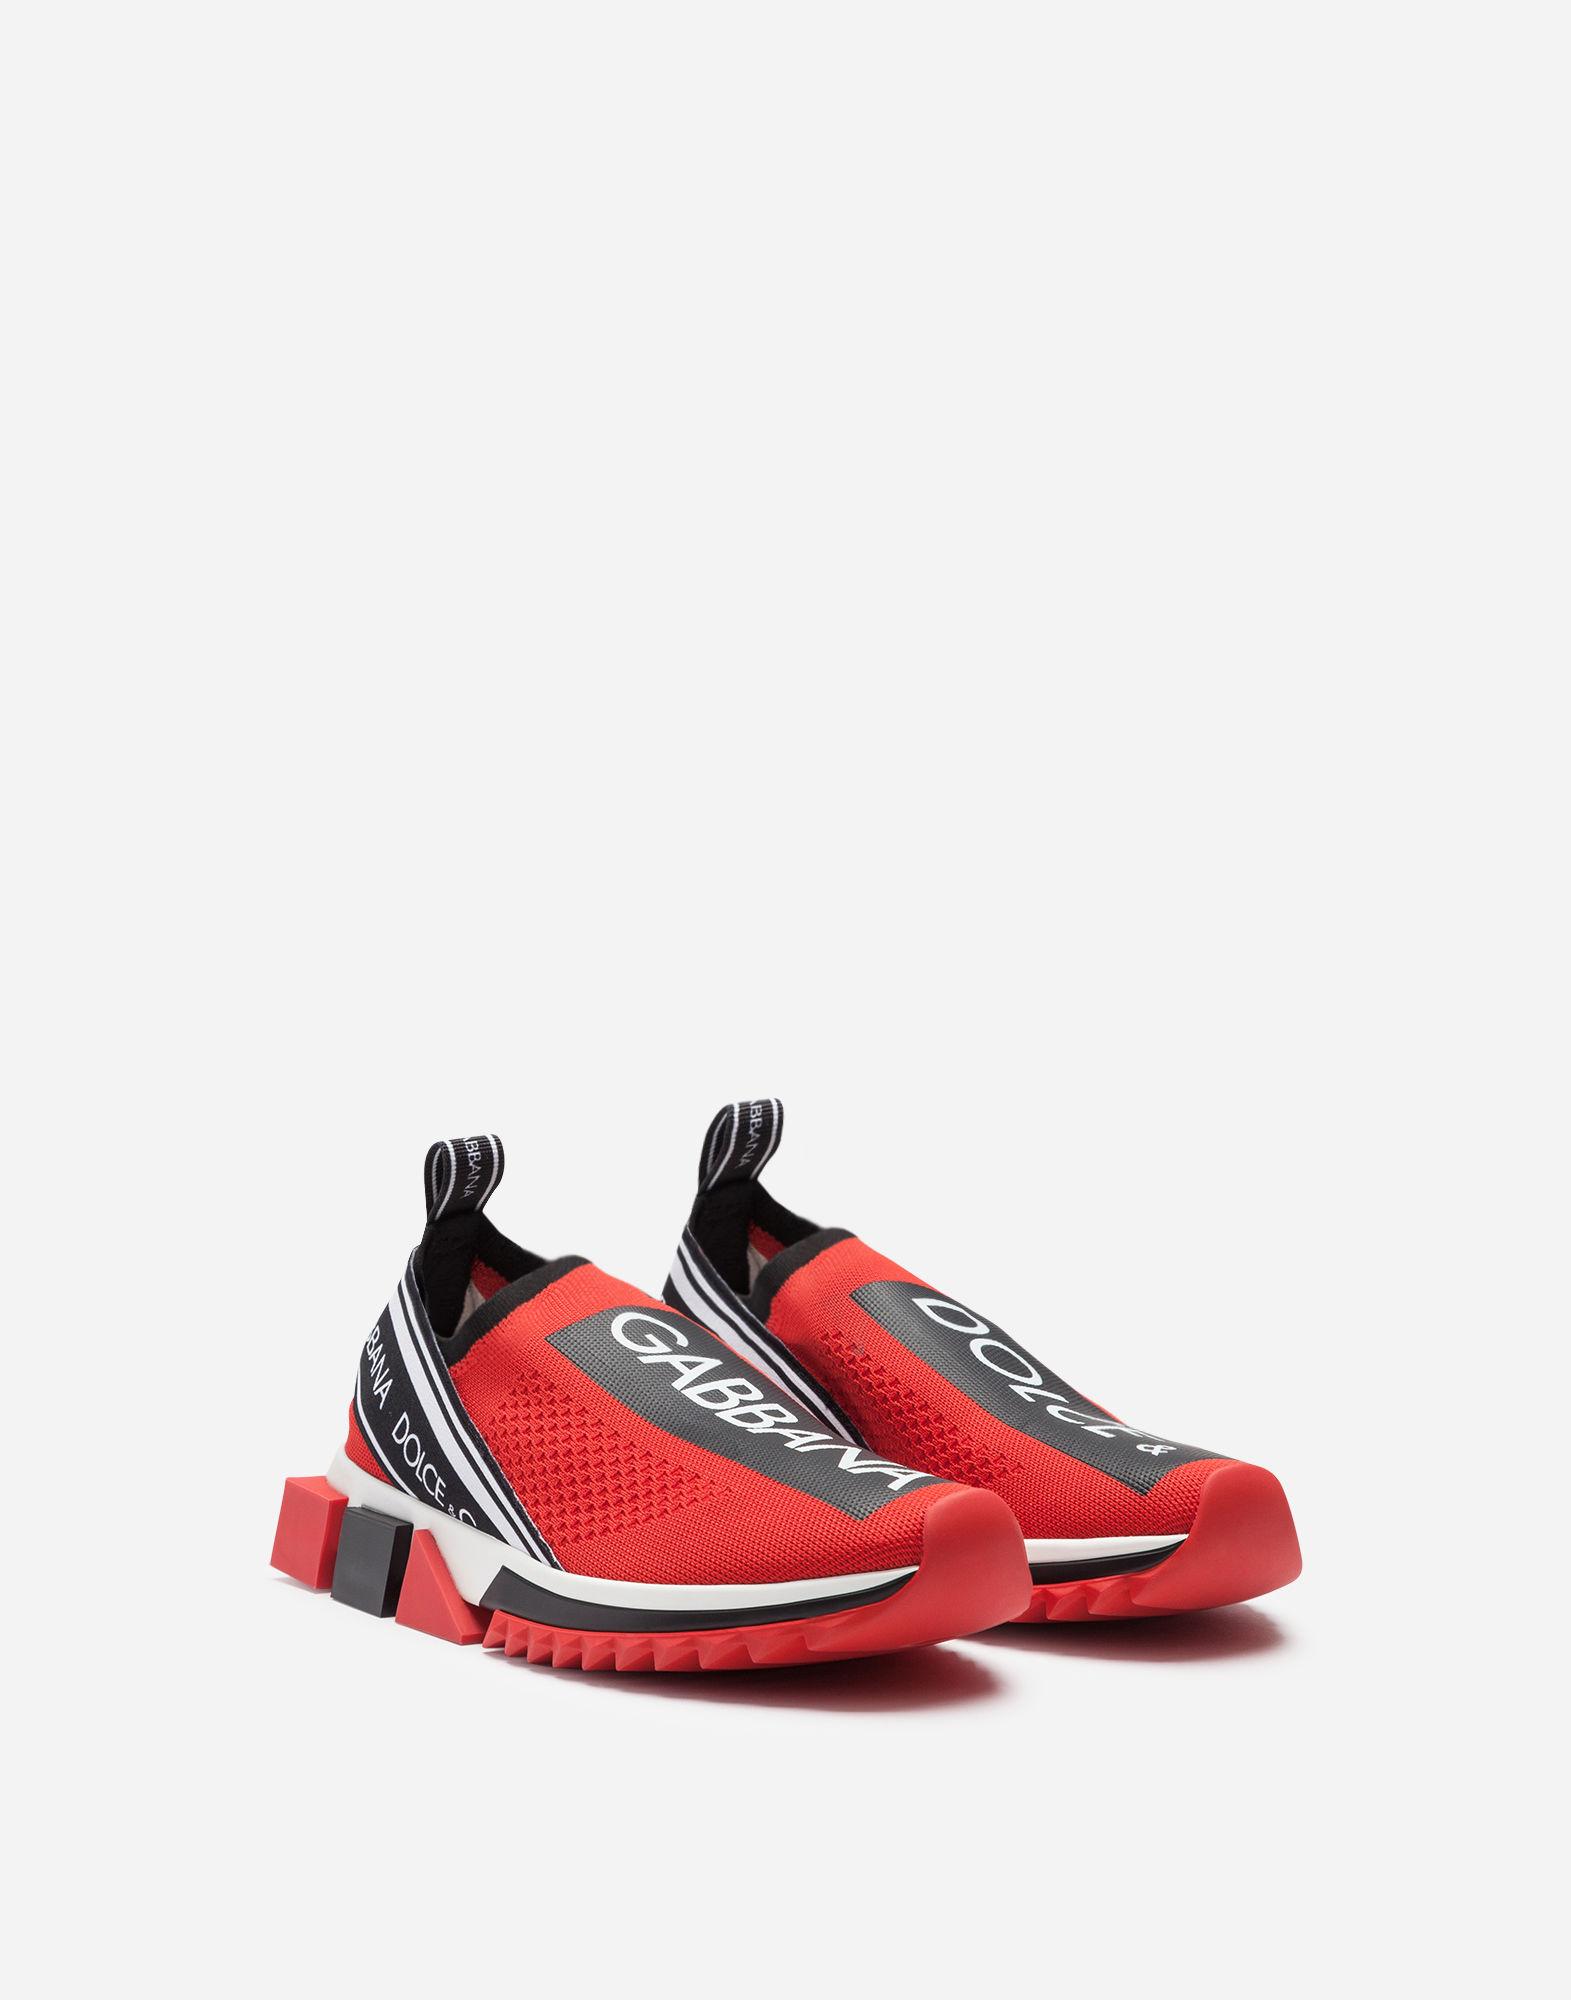 Dolce & Gabbana Branded Sorrento Sneakers in Red - Lyst